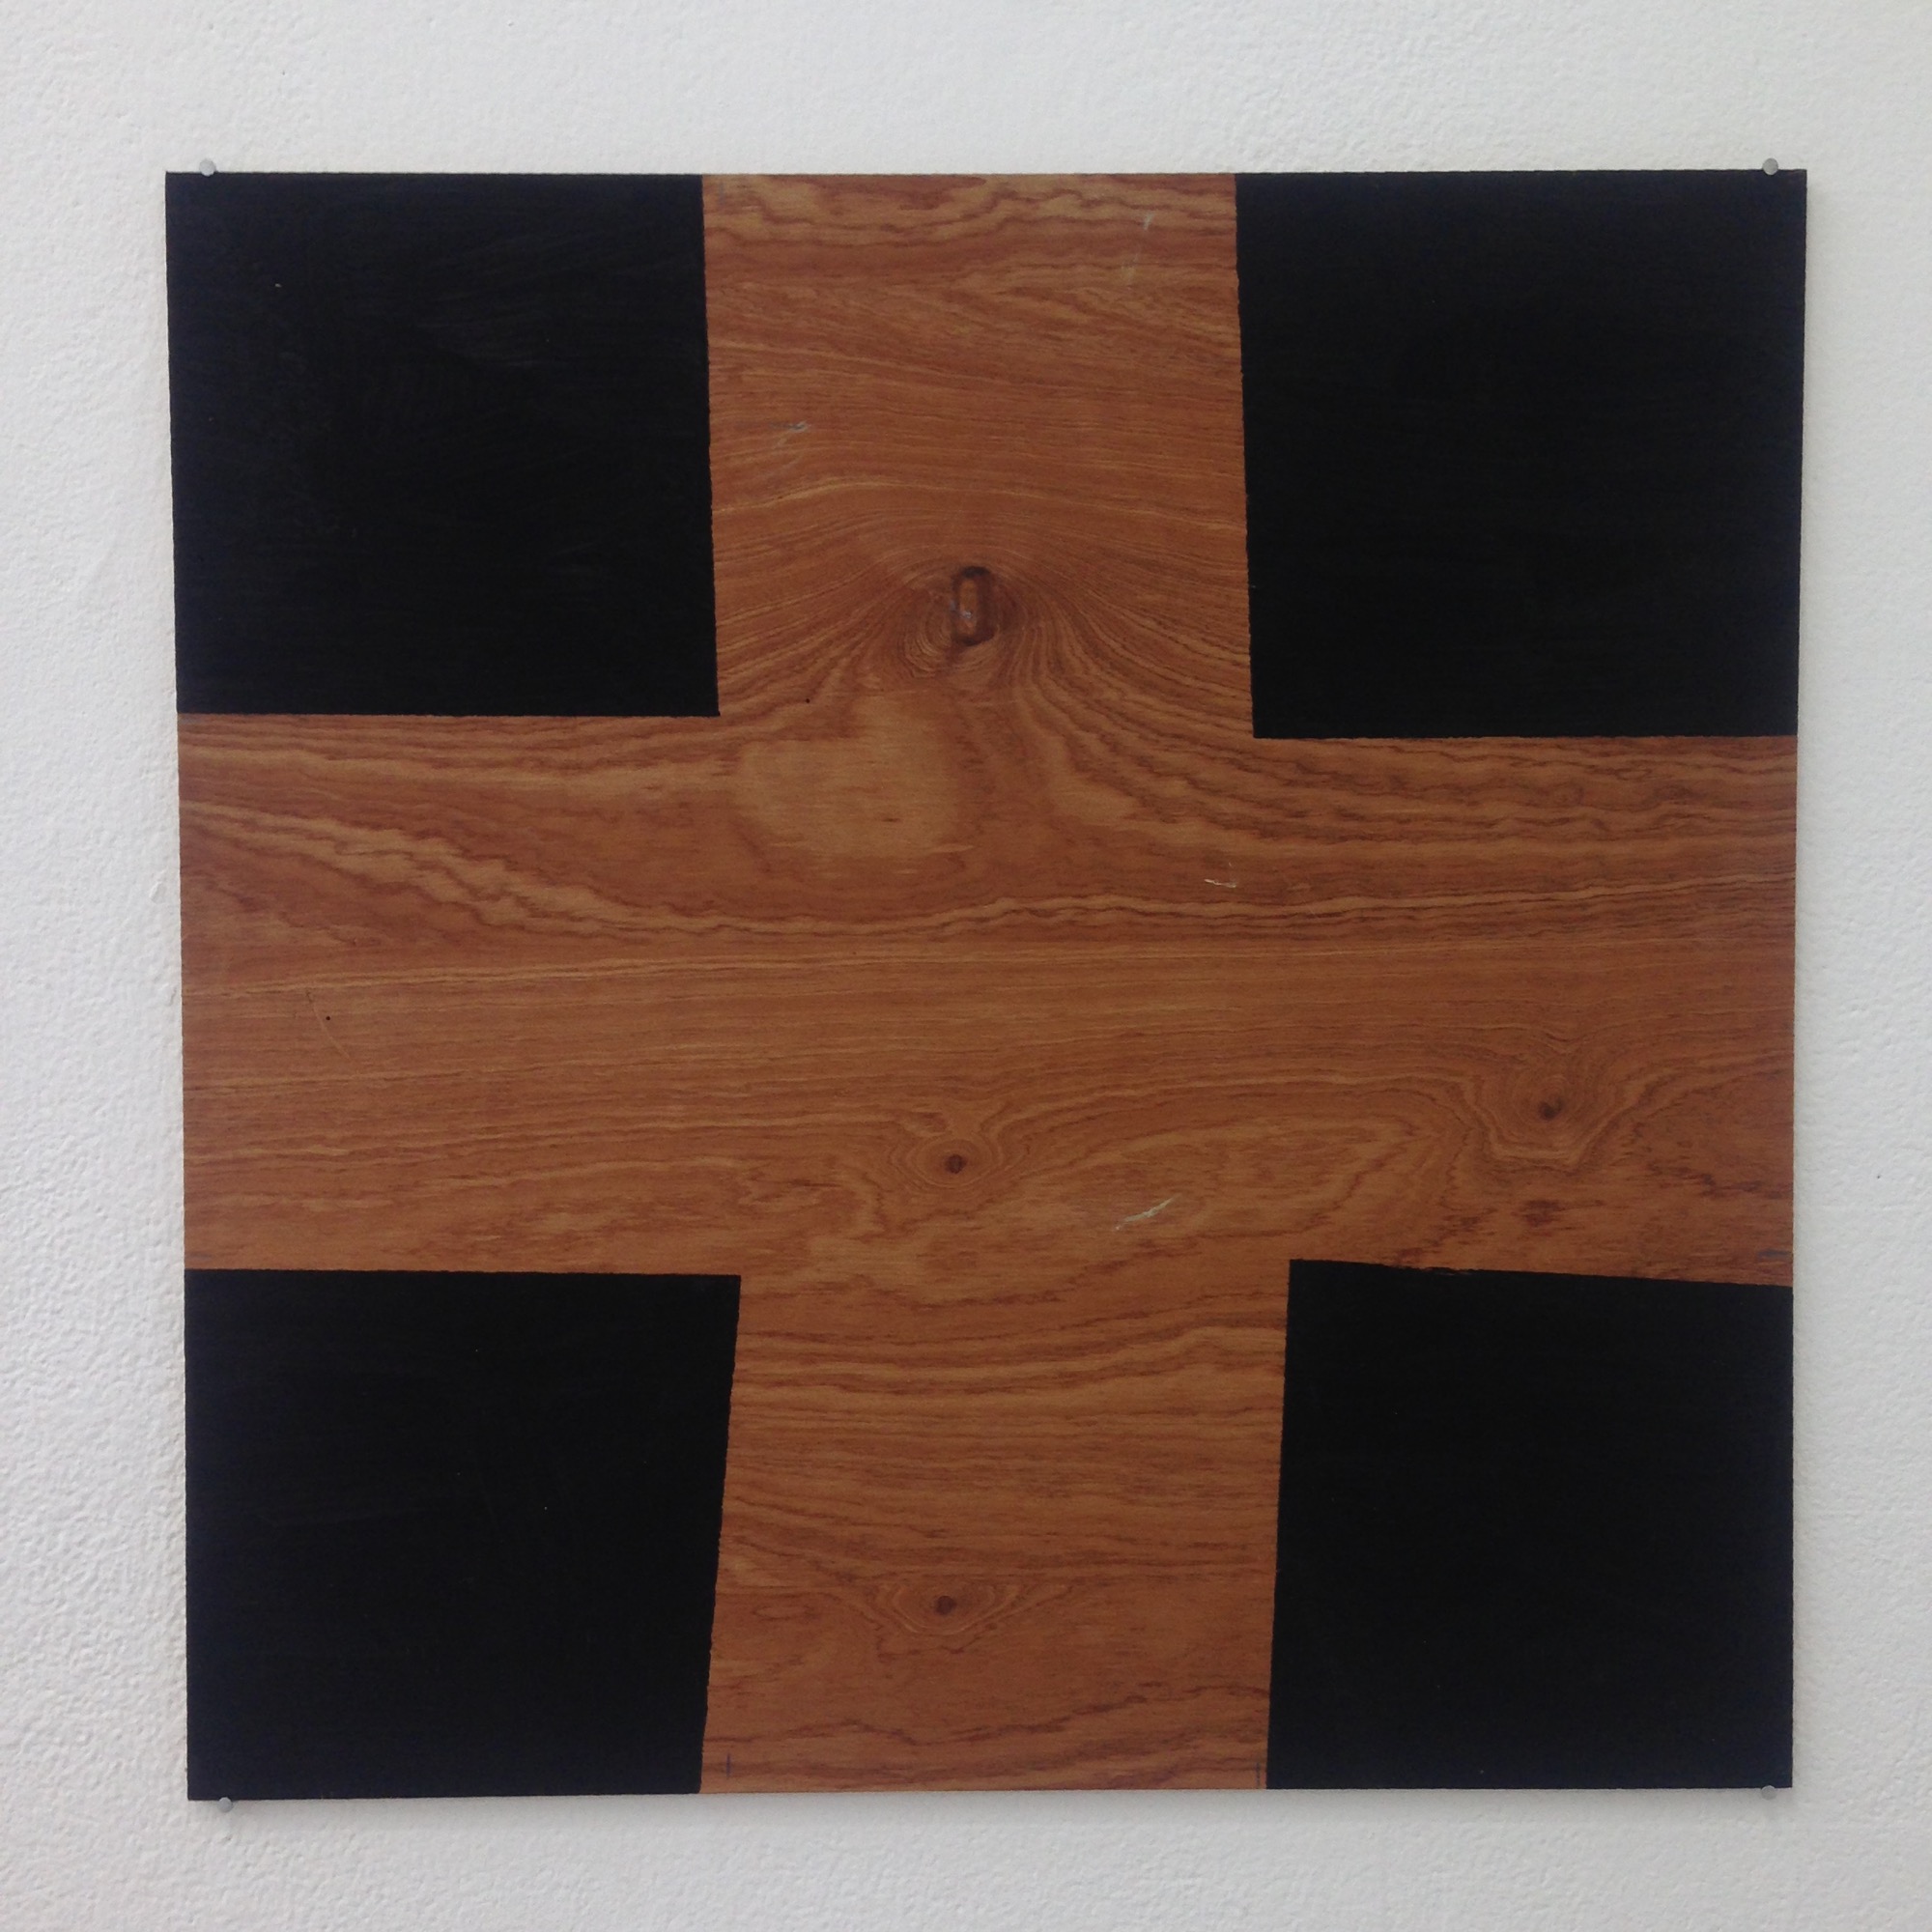 John Nixon, Black and Brown Cross, 1988, enamel on plywood. Courtesy of Anna Schwartz Gallery, Melbourne.